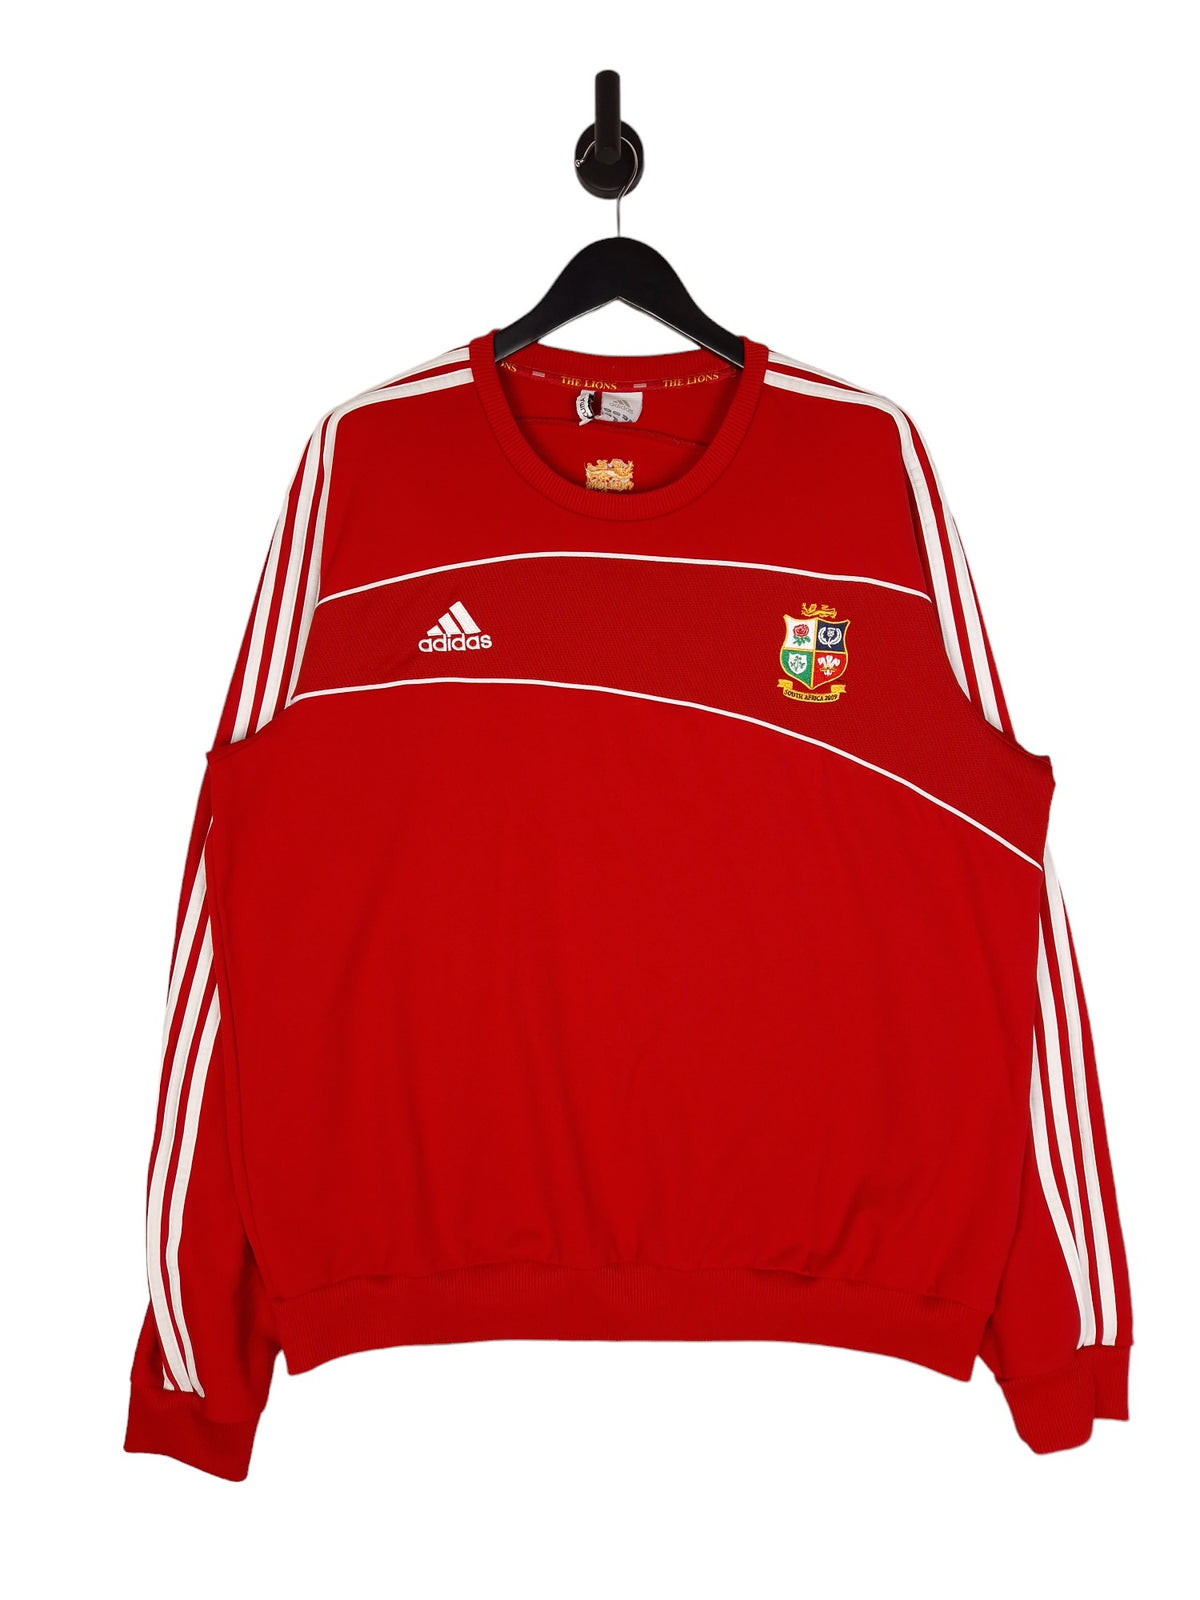 Adidas British & Irish Lions 2009 South Africa Sweatshirt - Size 3XL